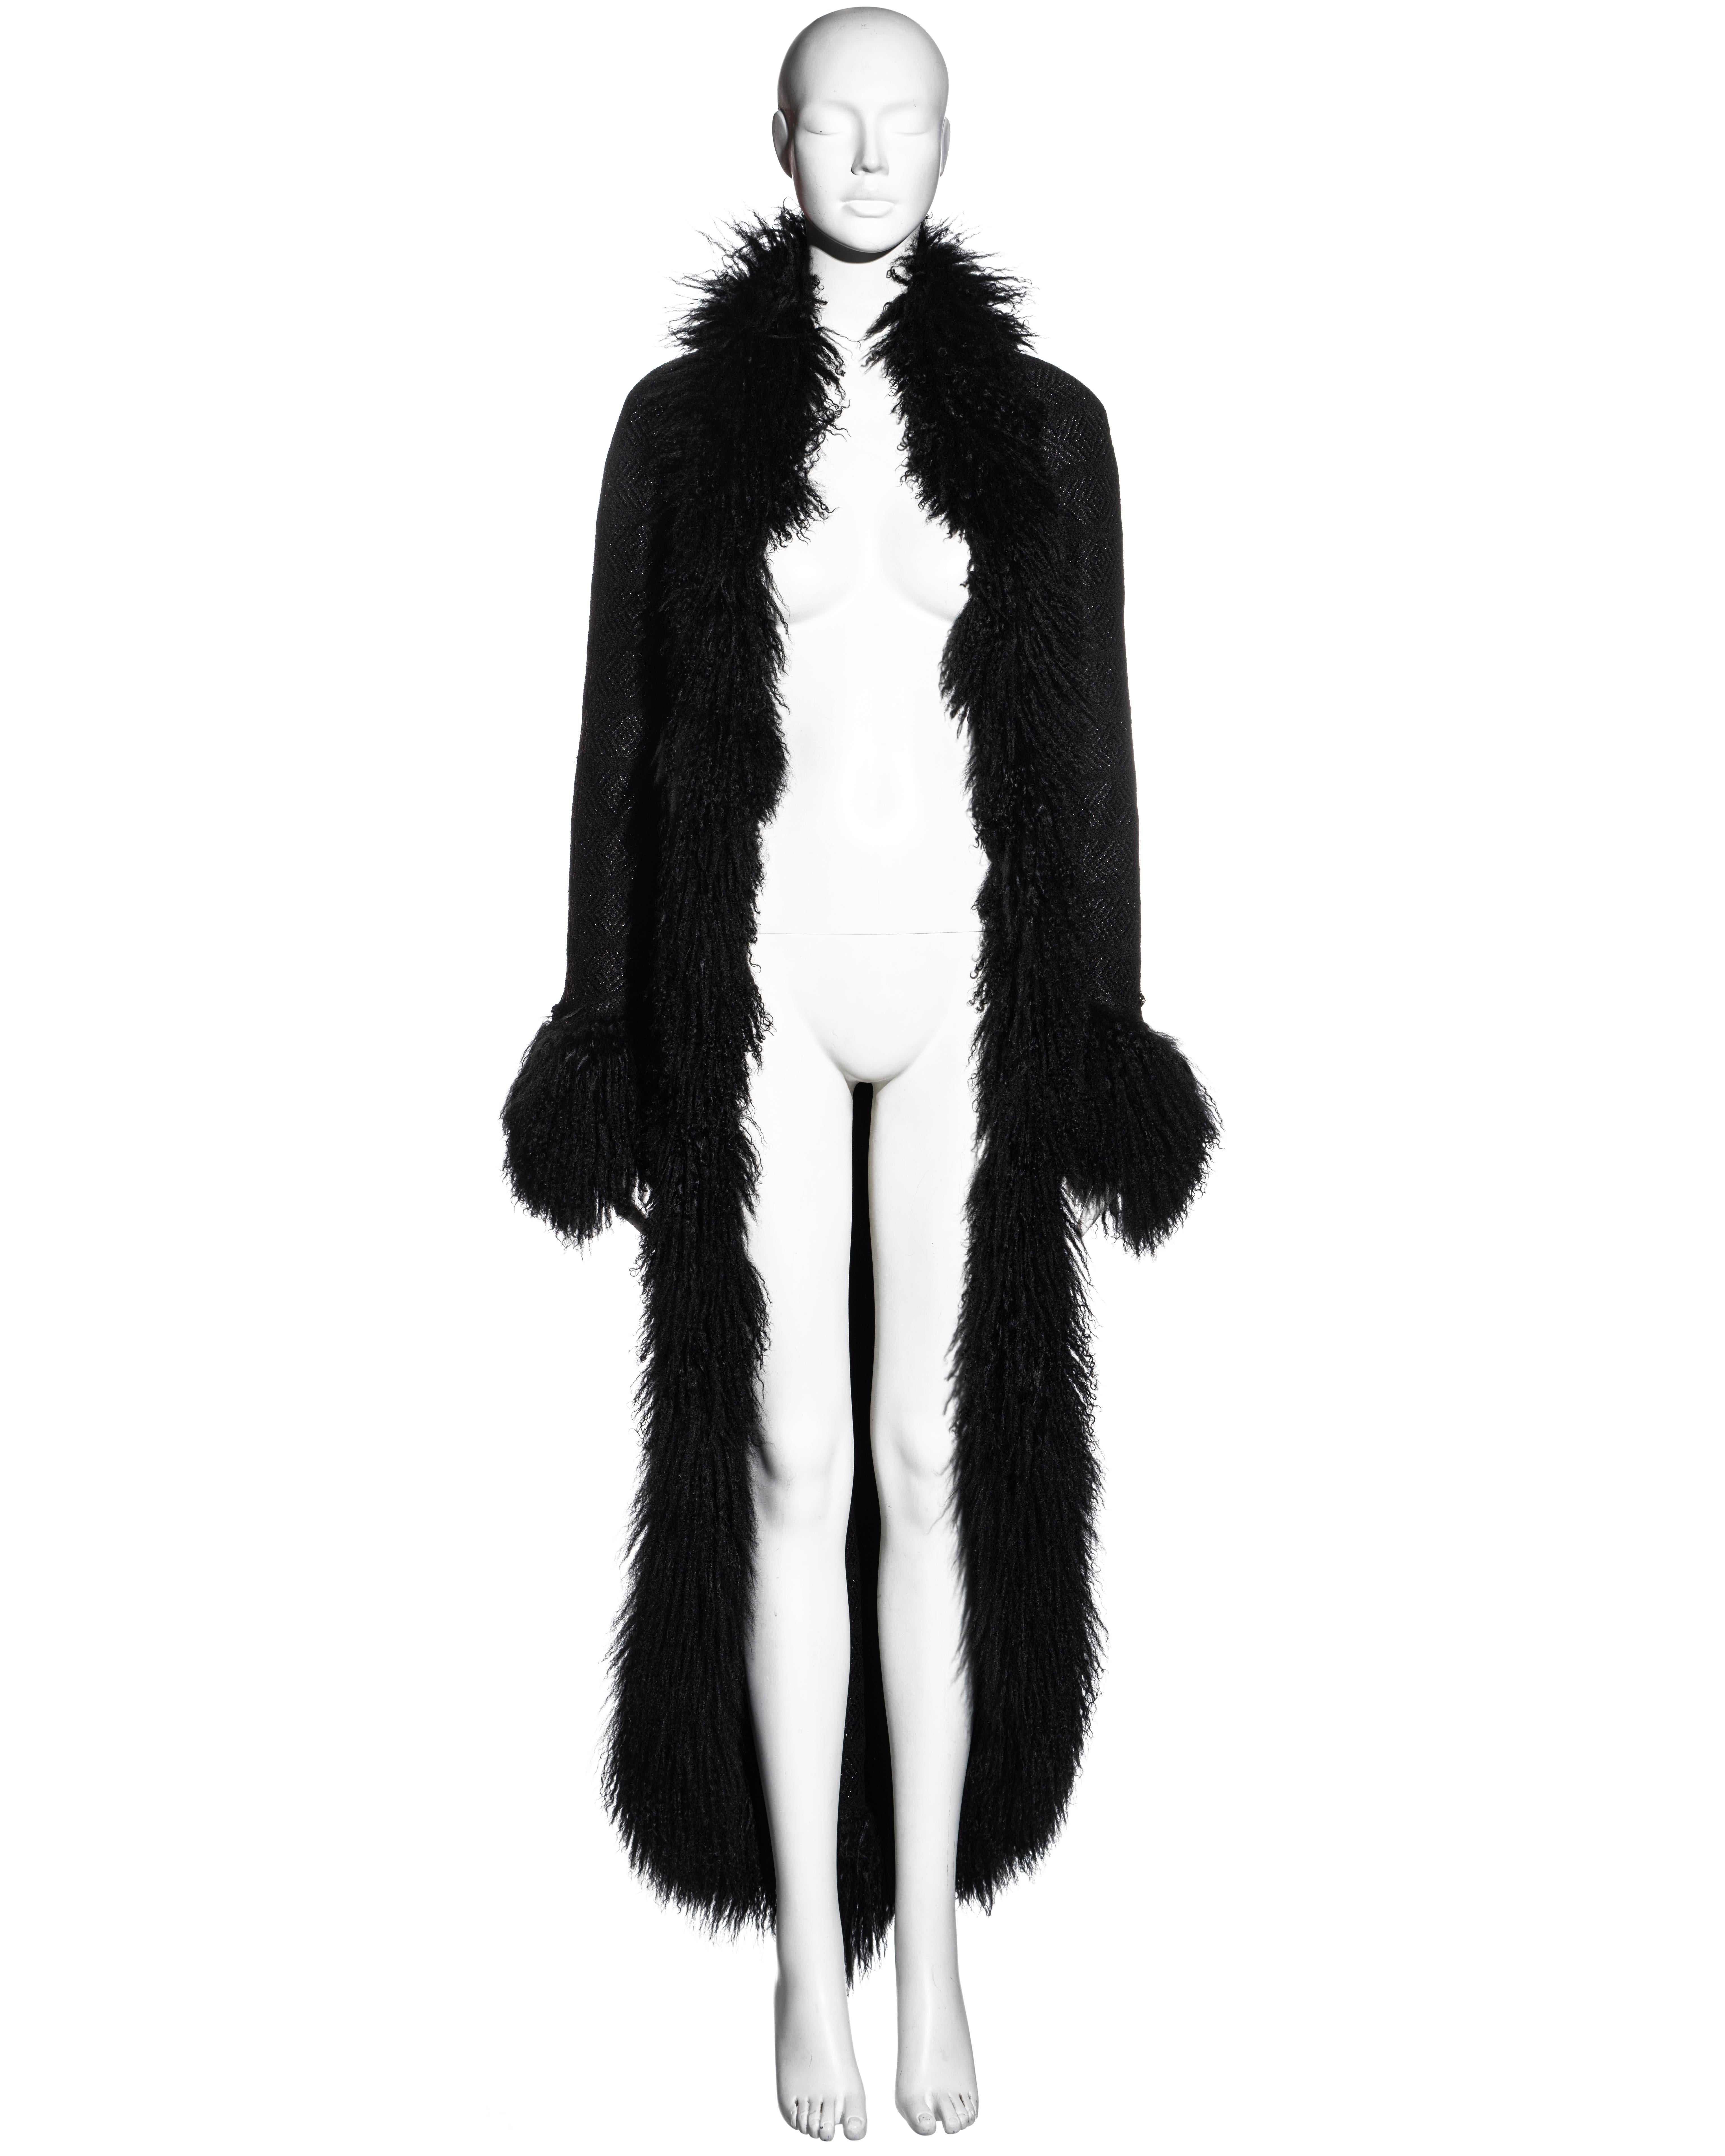 Black Chanel by Karl Lagerfeld black tweed and Mongolian lambs wool coat, fw 2008